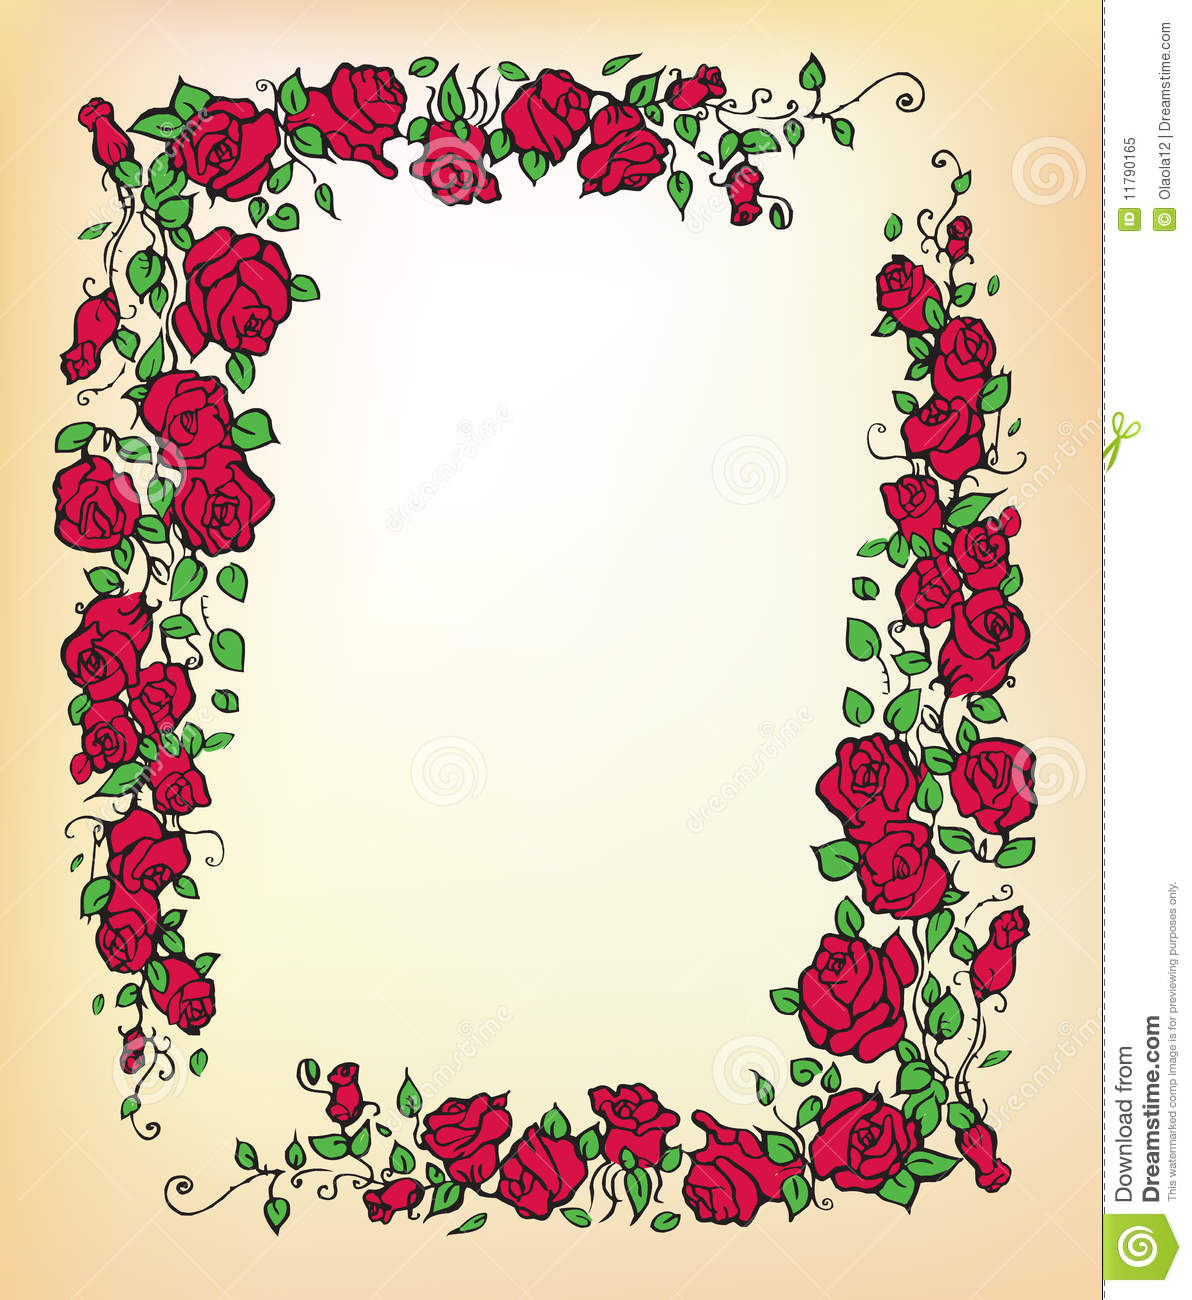 Decorative Red Rose Border Royalty Free Stock Photo   Image  11790165